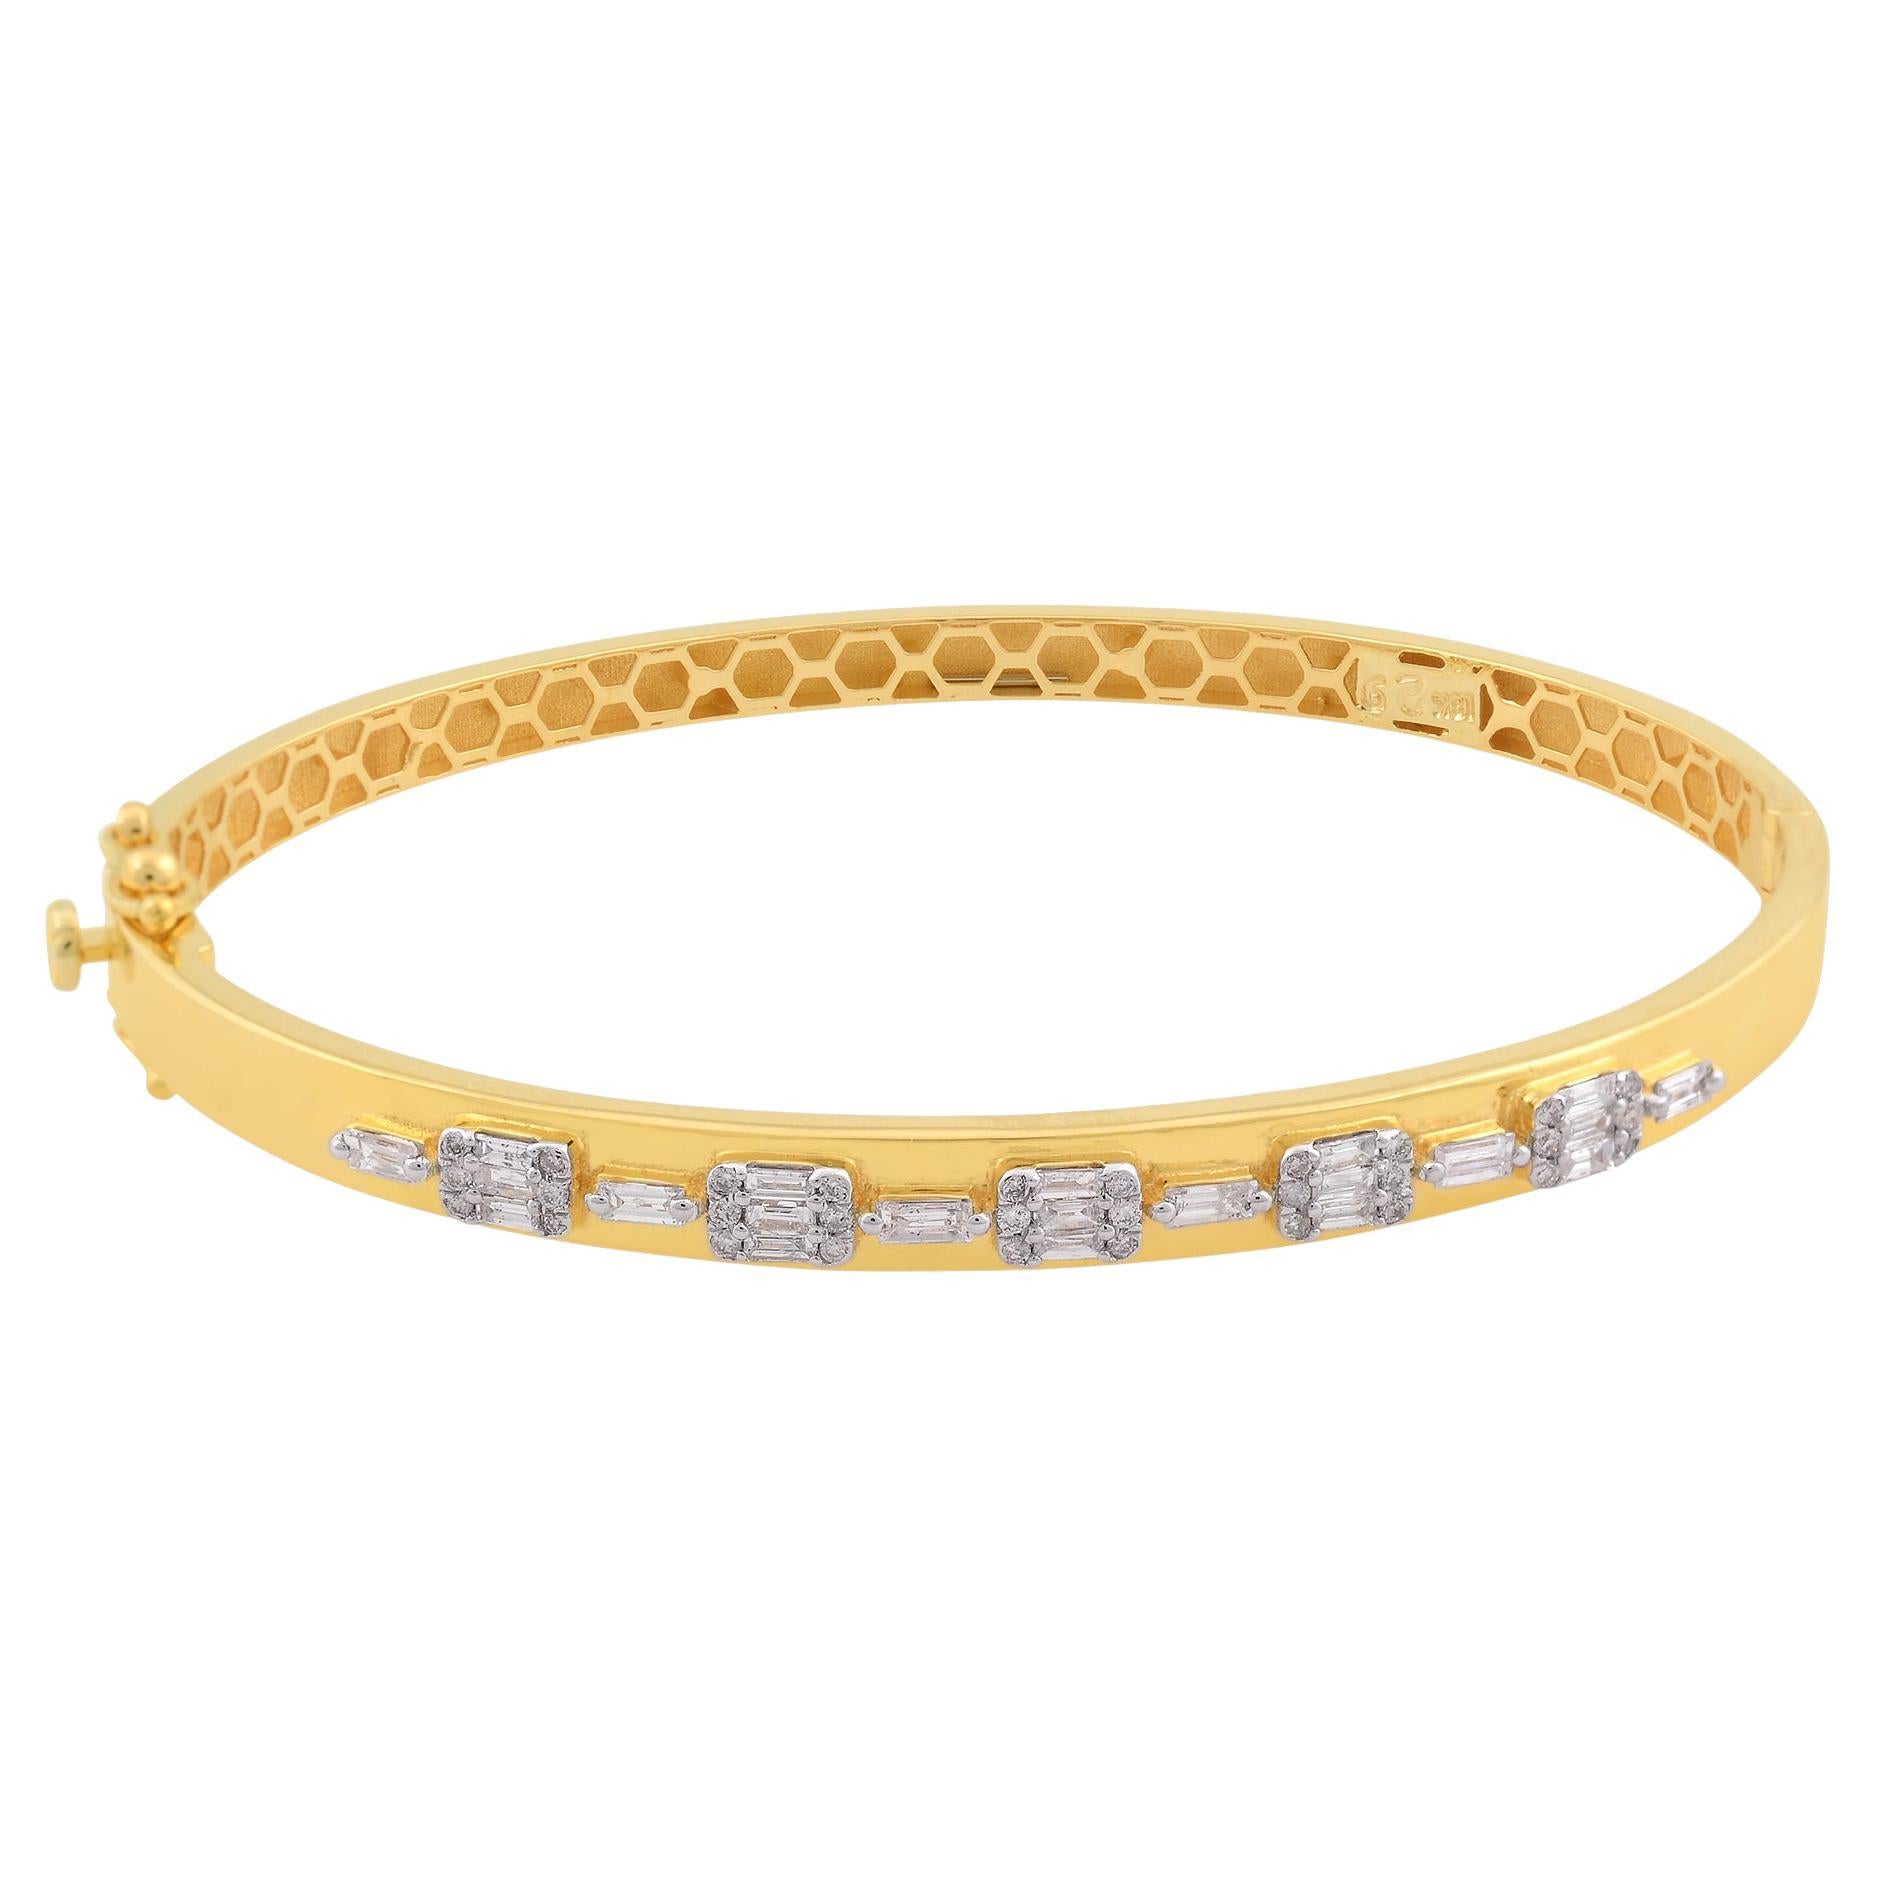 0.6 Ct SI Clarity HI Color Baguette Diamond Bangle Bracelet 14 Karat Yellow Gold